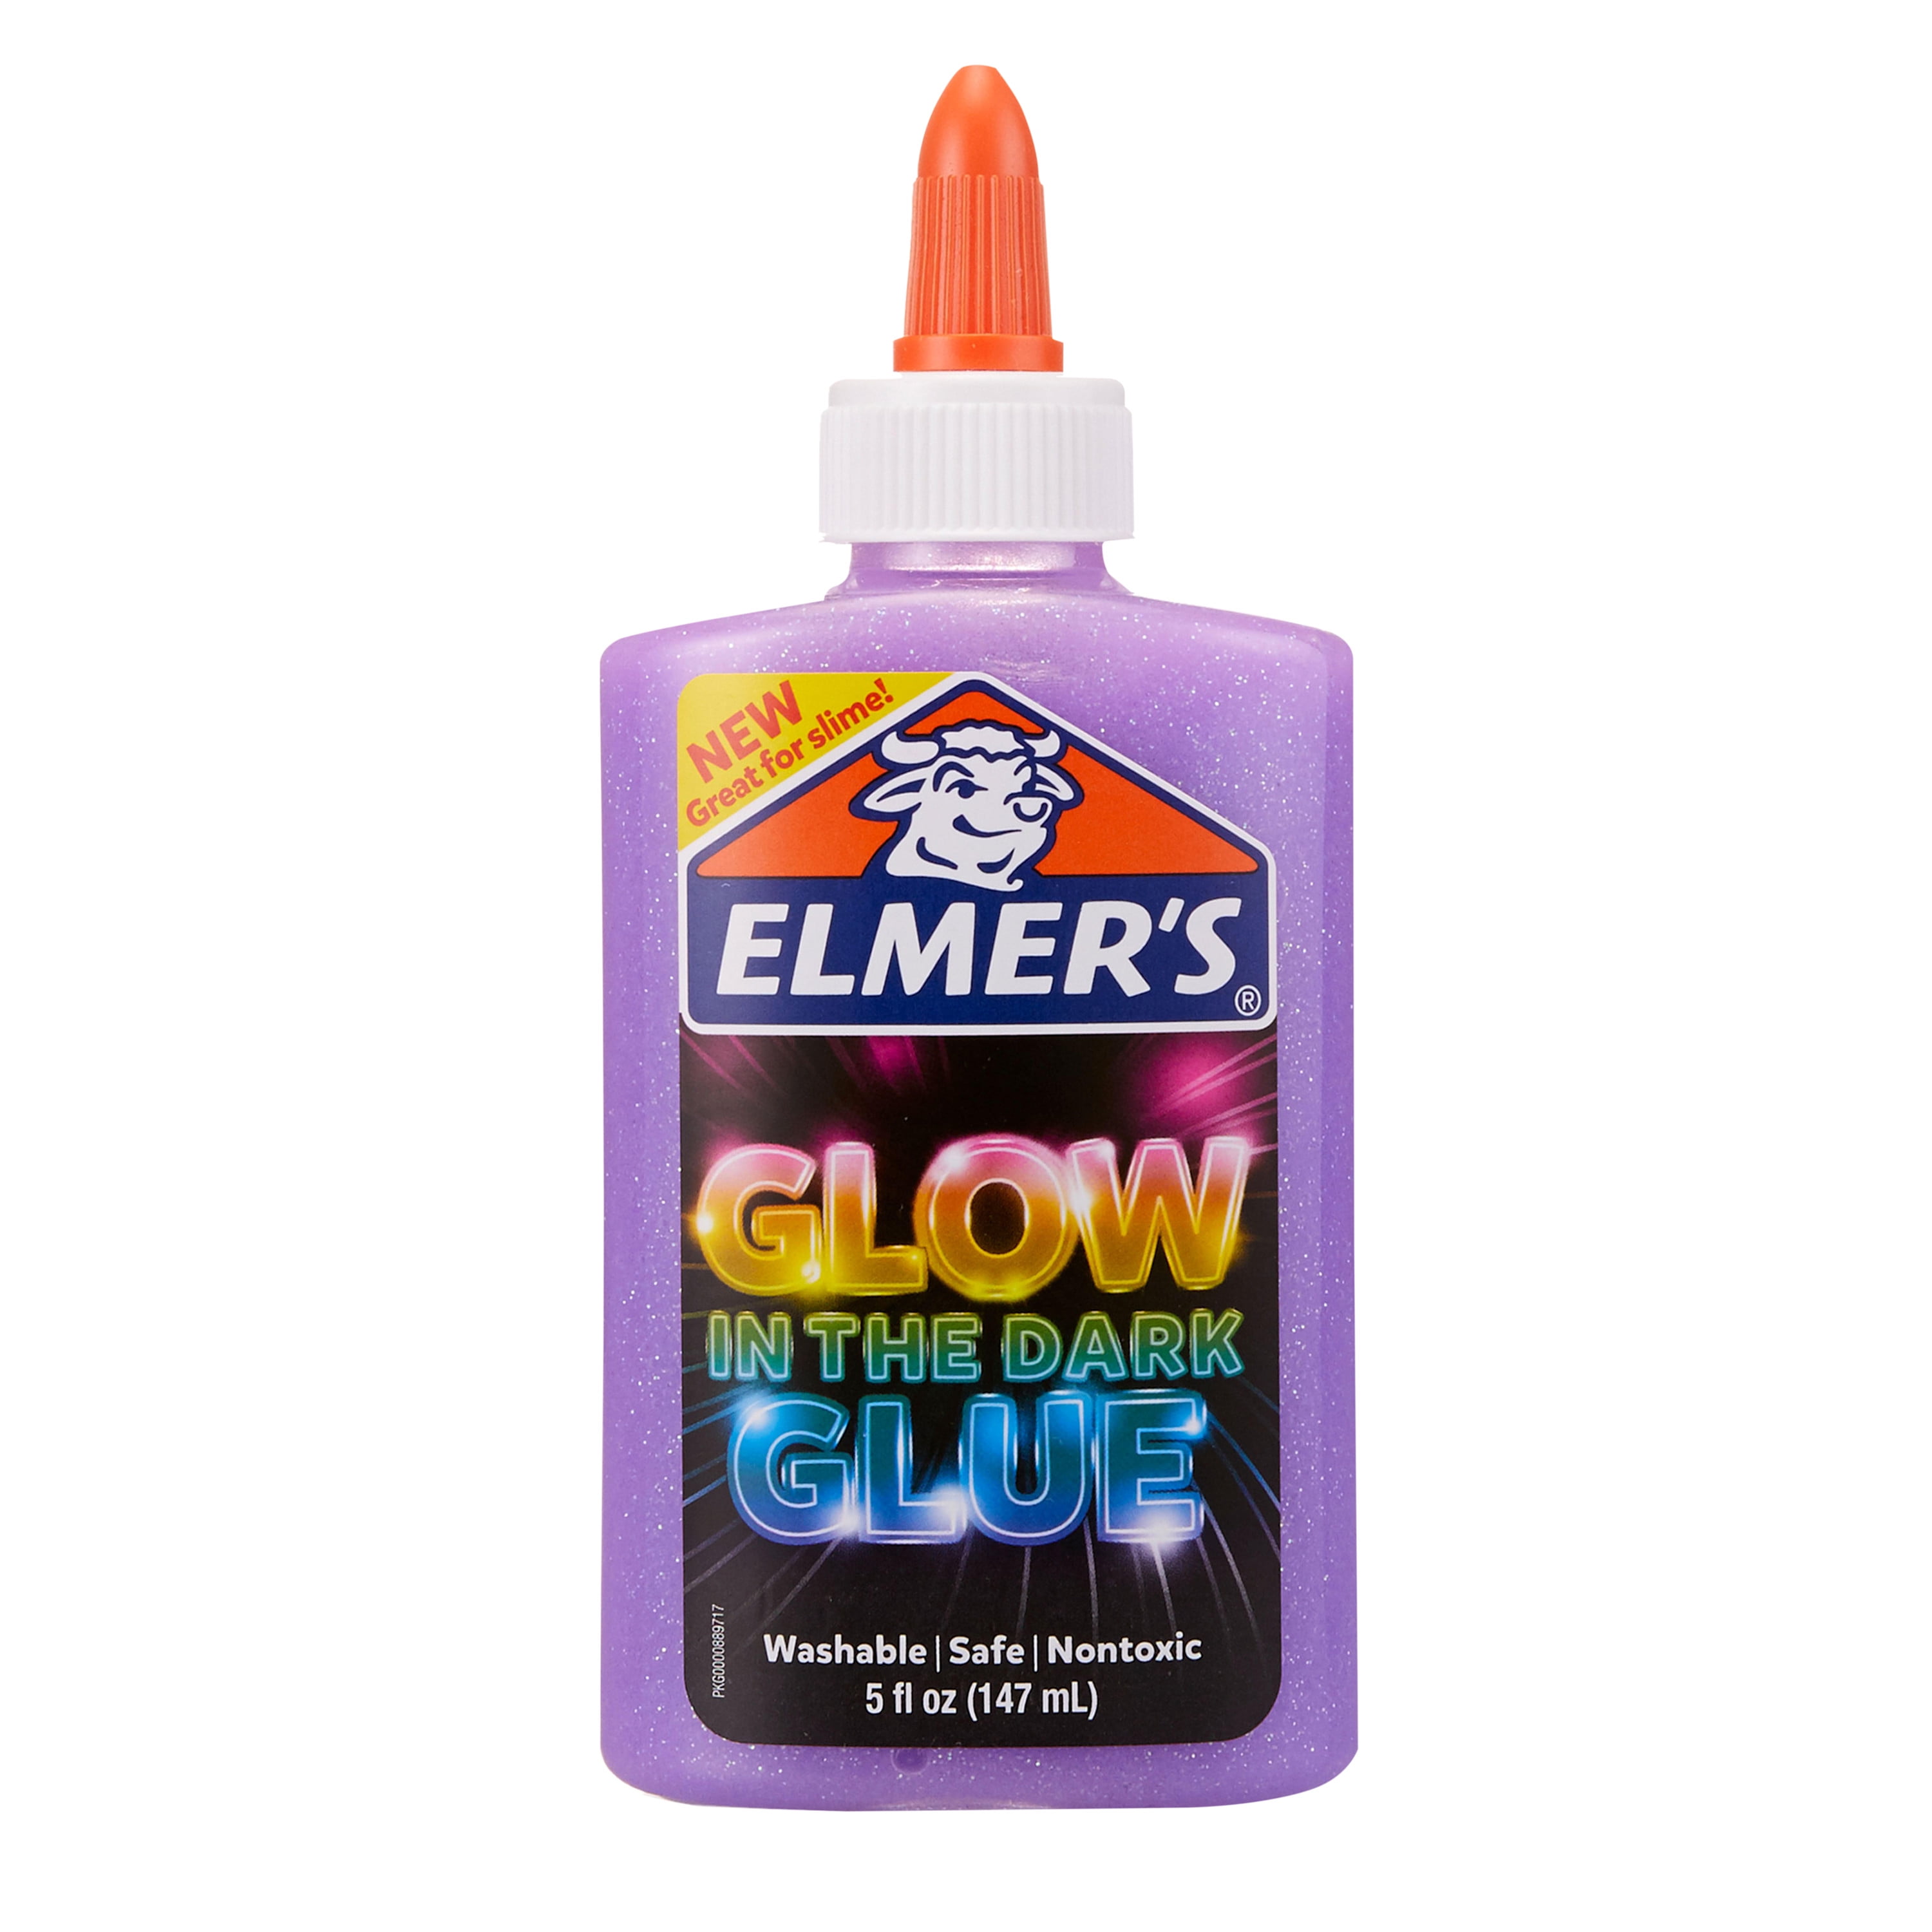  Elmer's Glow in the Dark Liquid Glue, Great for